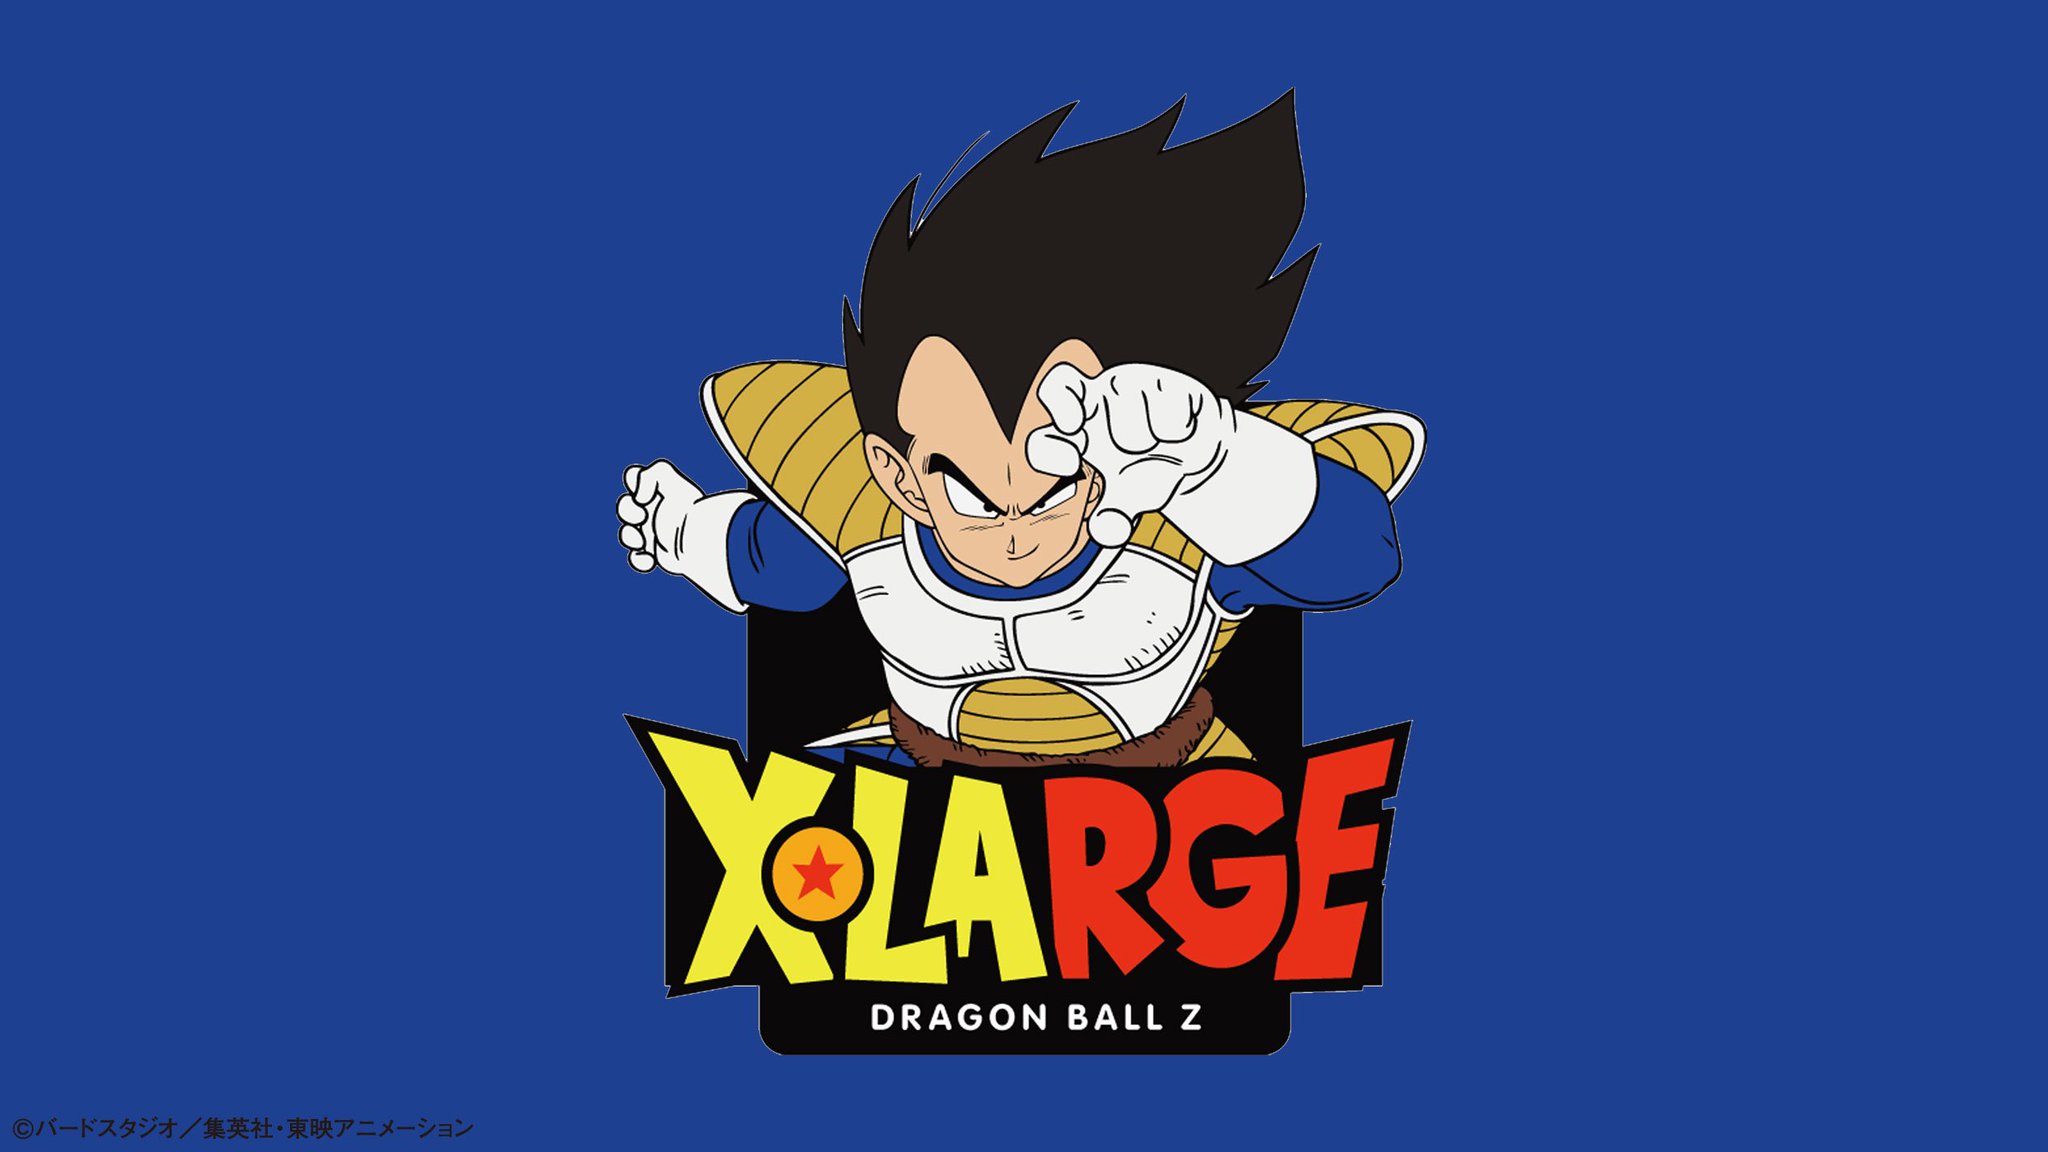 Xlarge 再入荷 Restock Xlarge Dragon Ball Z Vegeta T Co B9tsvexbec T Co Brzaq3x9q7 Twitter